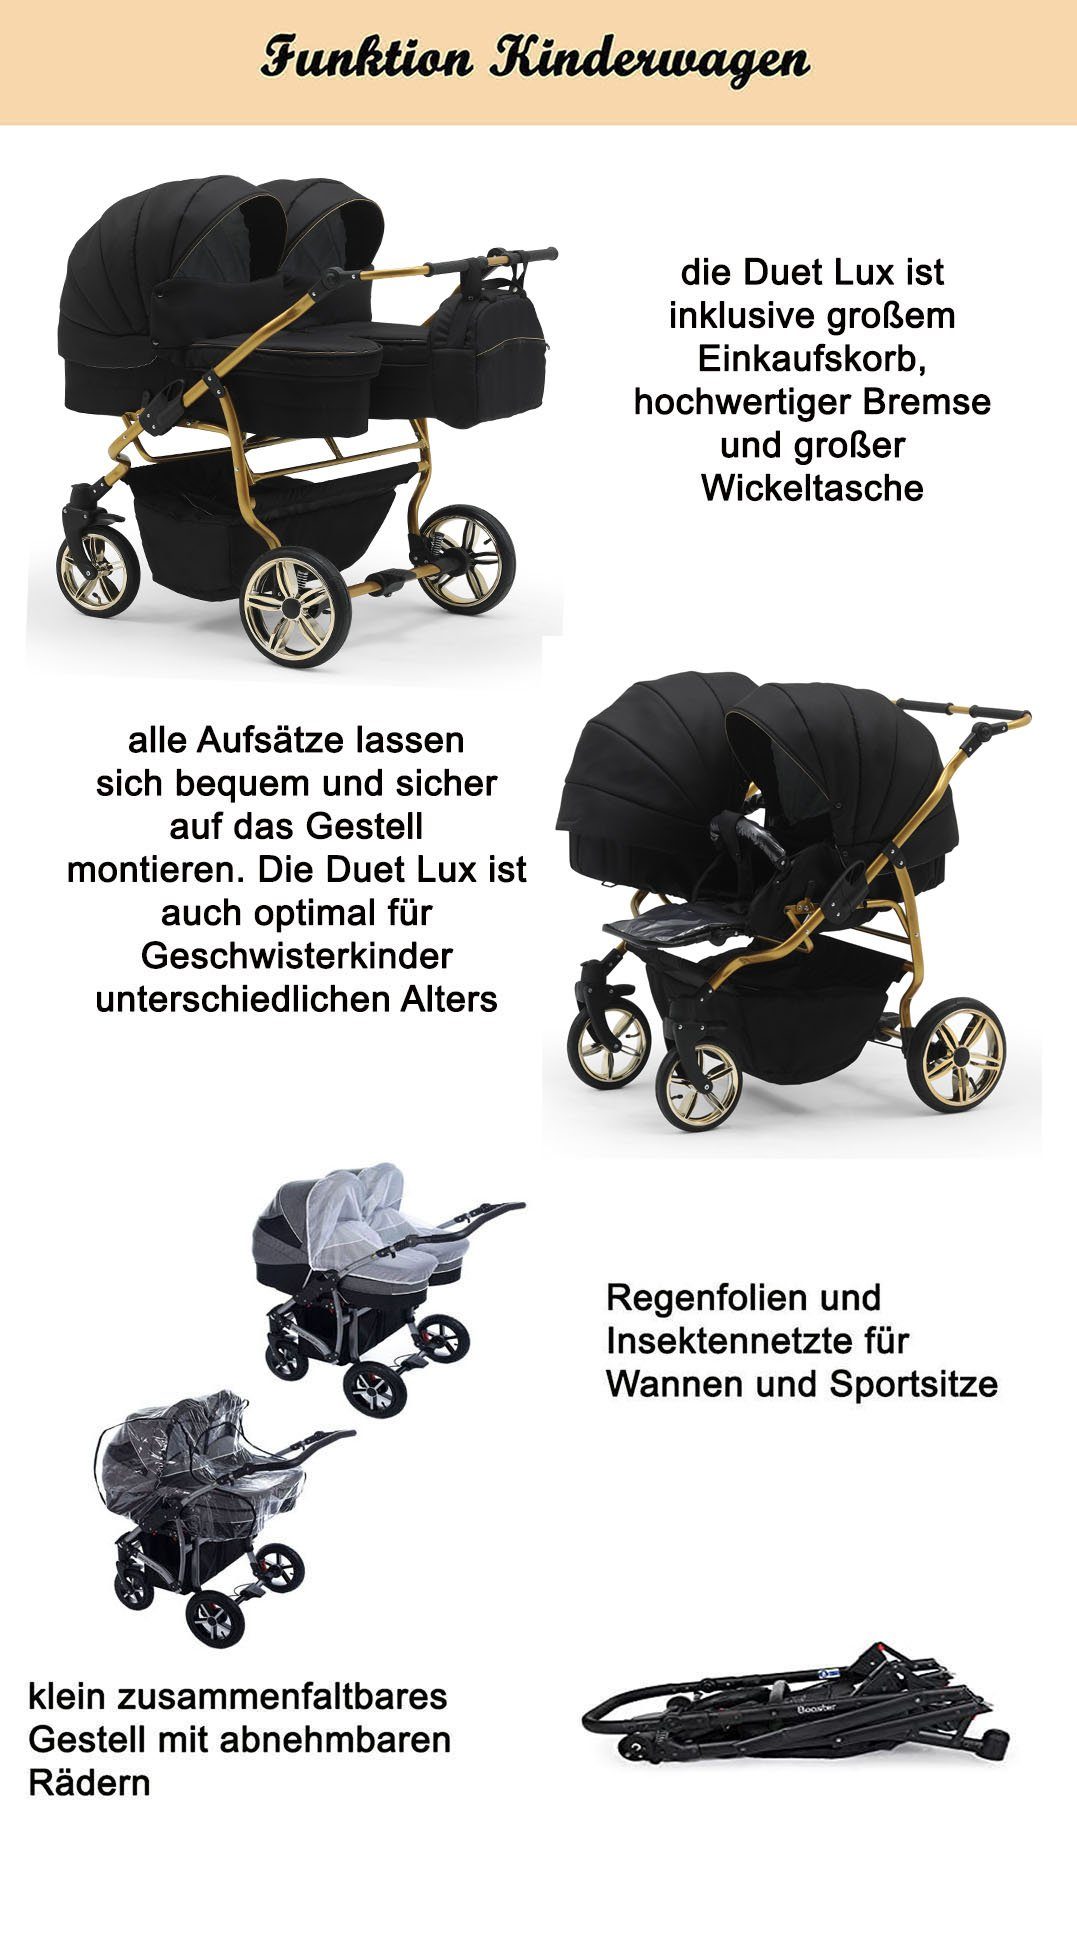 babies-on-wheels Zwillingswagen Zwillingskinderwagen 2 in Lux - 1 - Duet 33 Teile Beige-Grau in 10 Farben